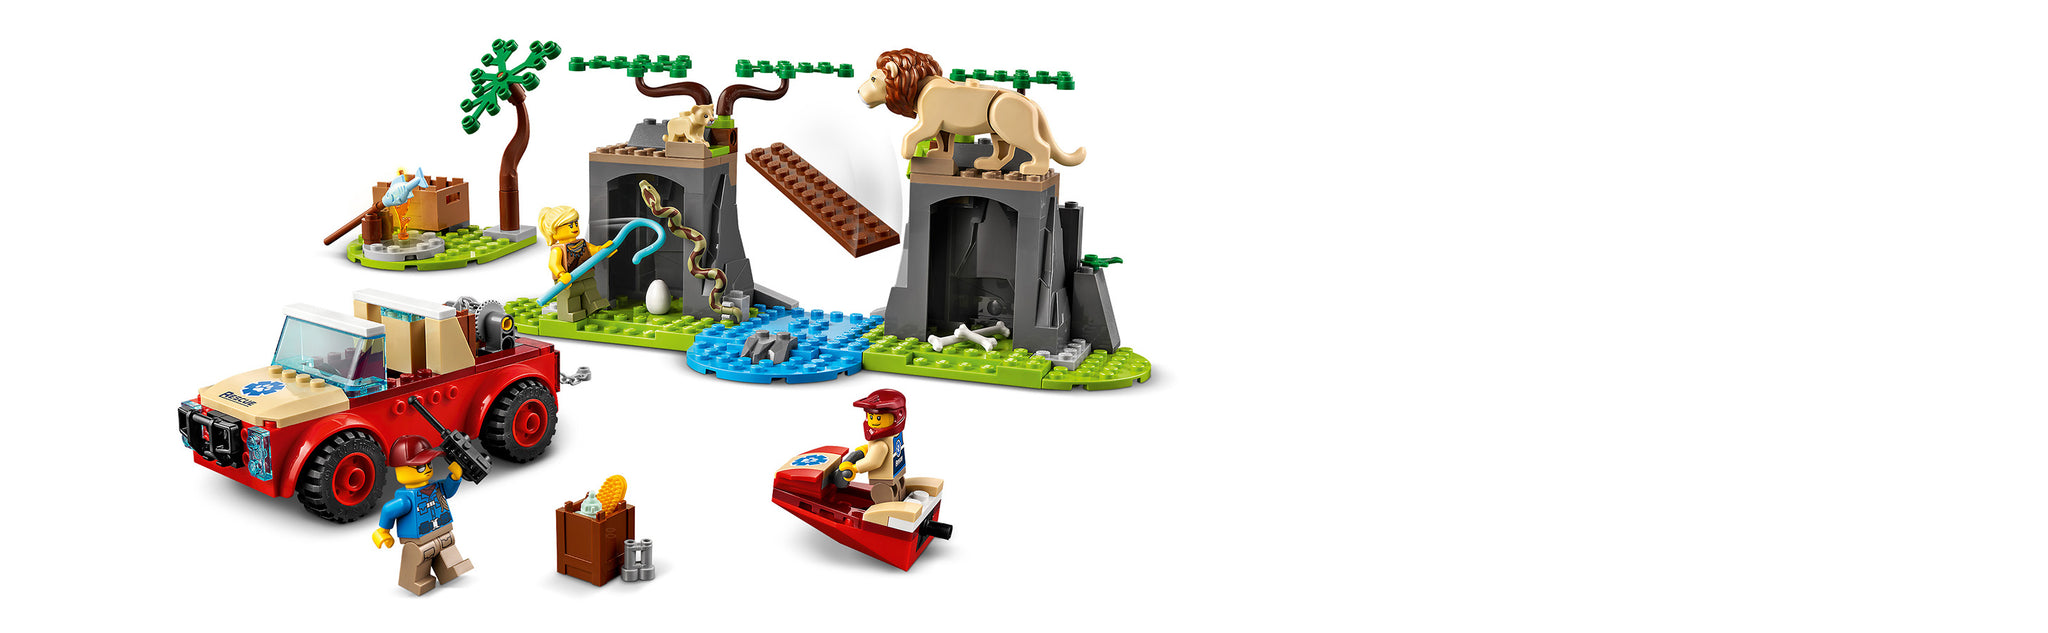 LEGO 60301 Reddings off-roader terreinwagen